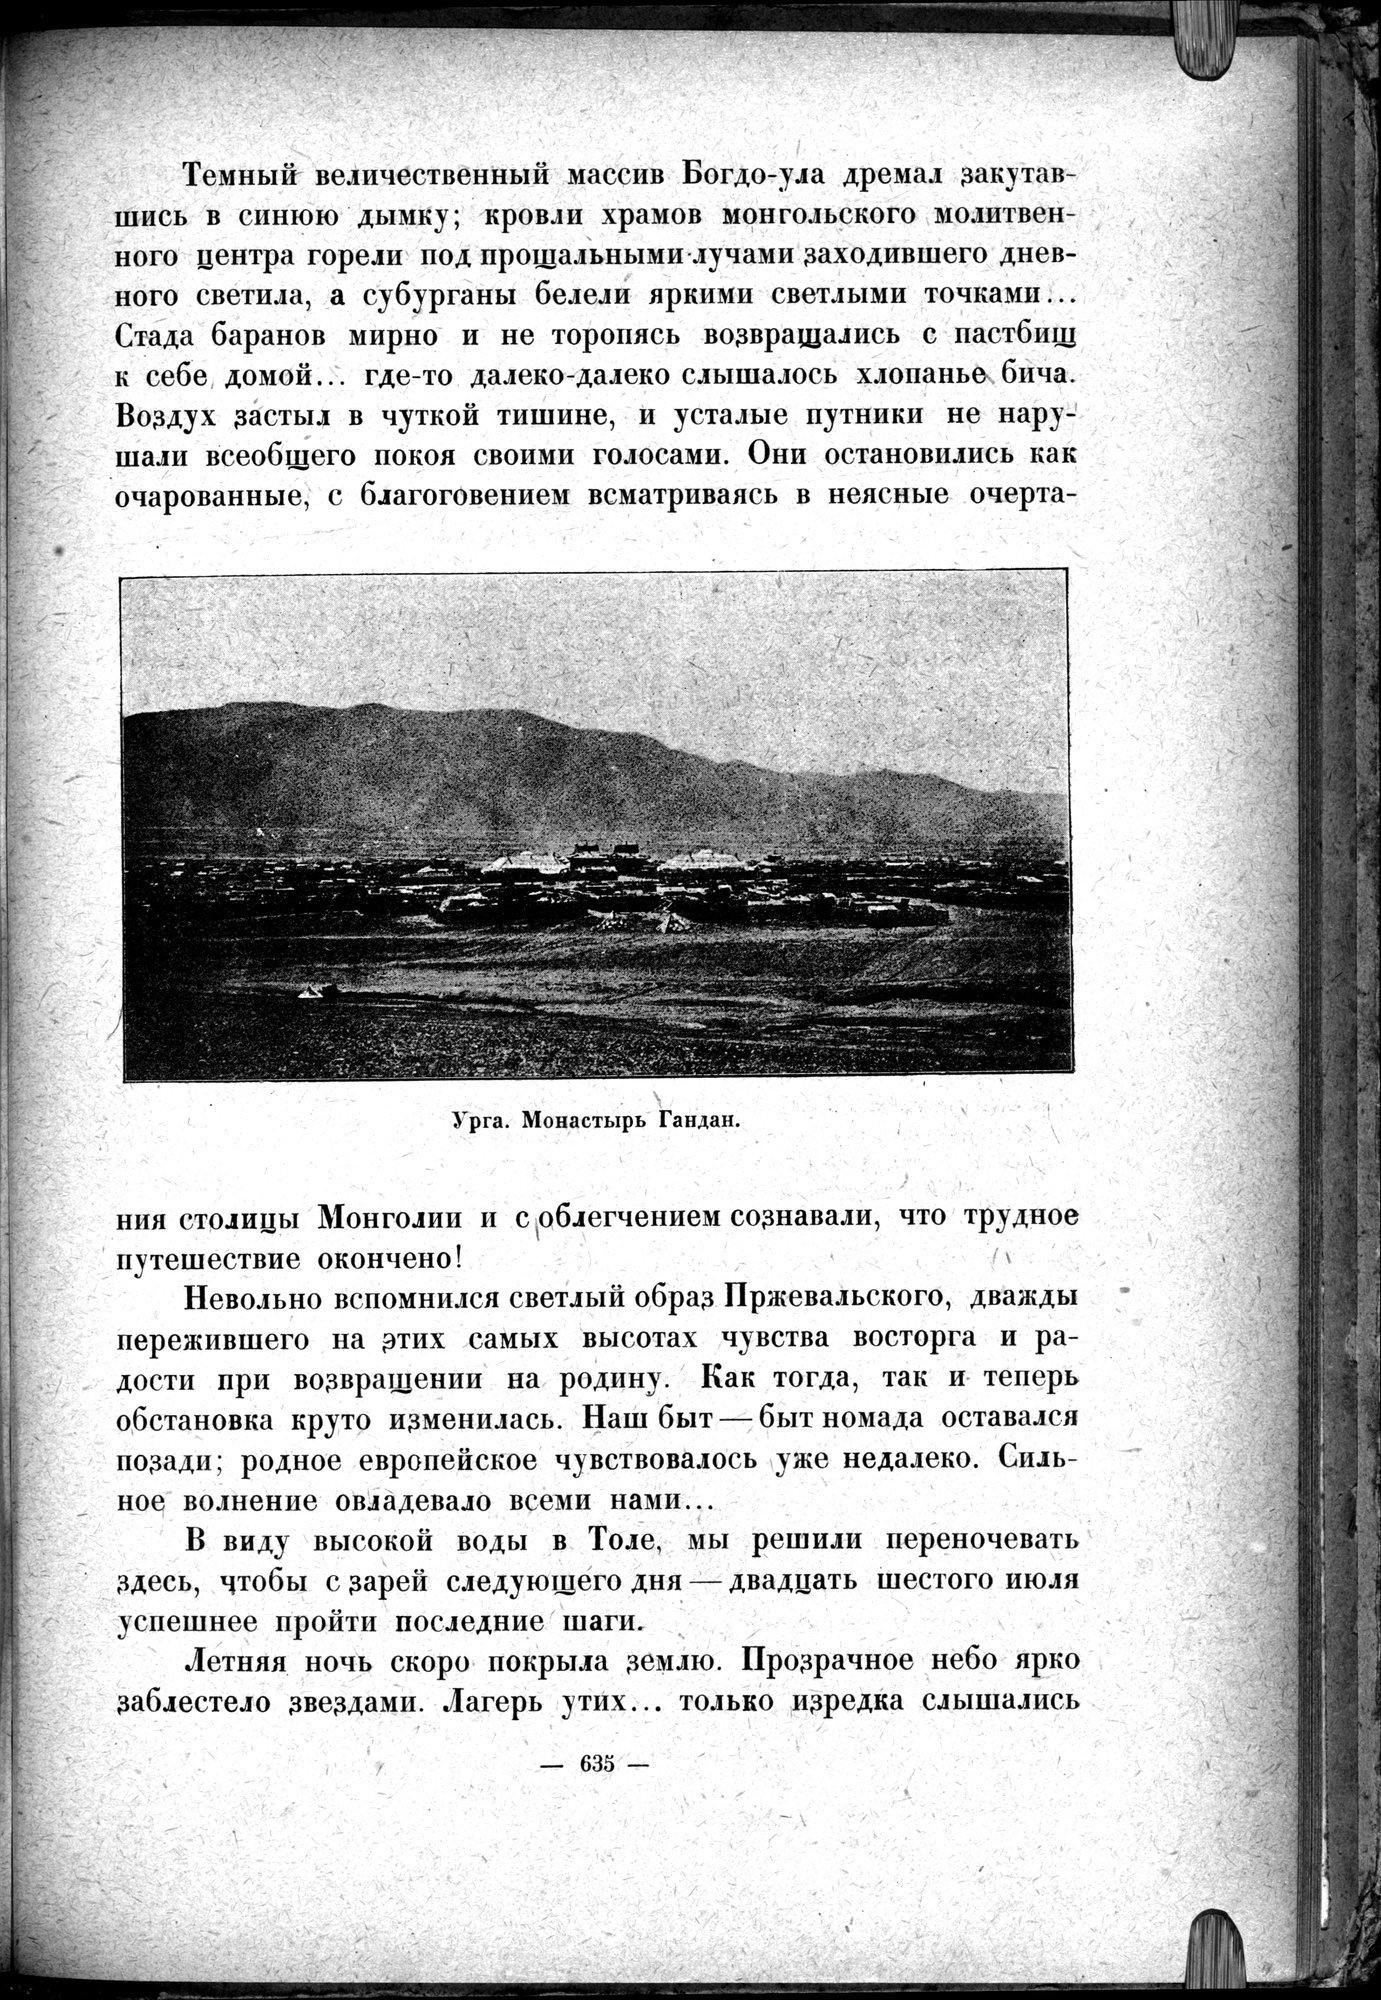 Mongoliya i Amdo i mertby gorod Khara-Khoto : vol.1 / Page 725 (Grayscale High Resolution Image)